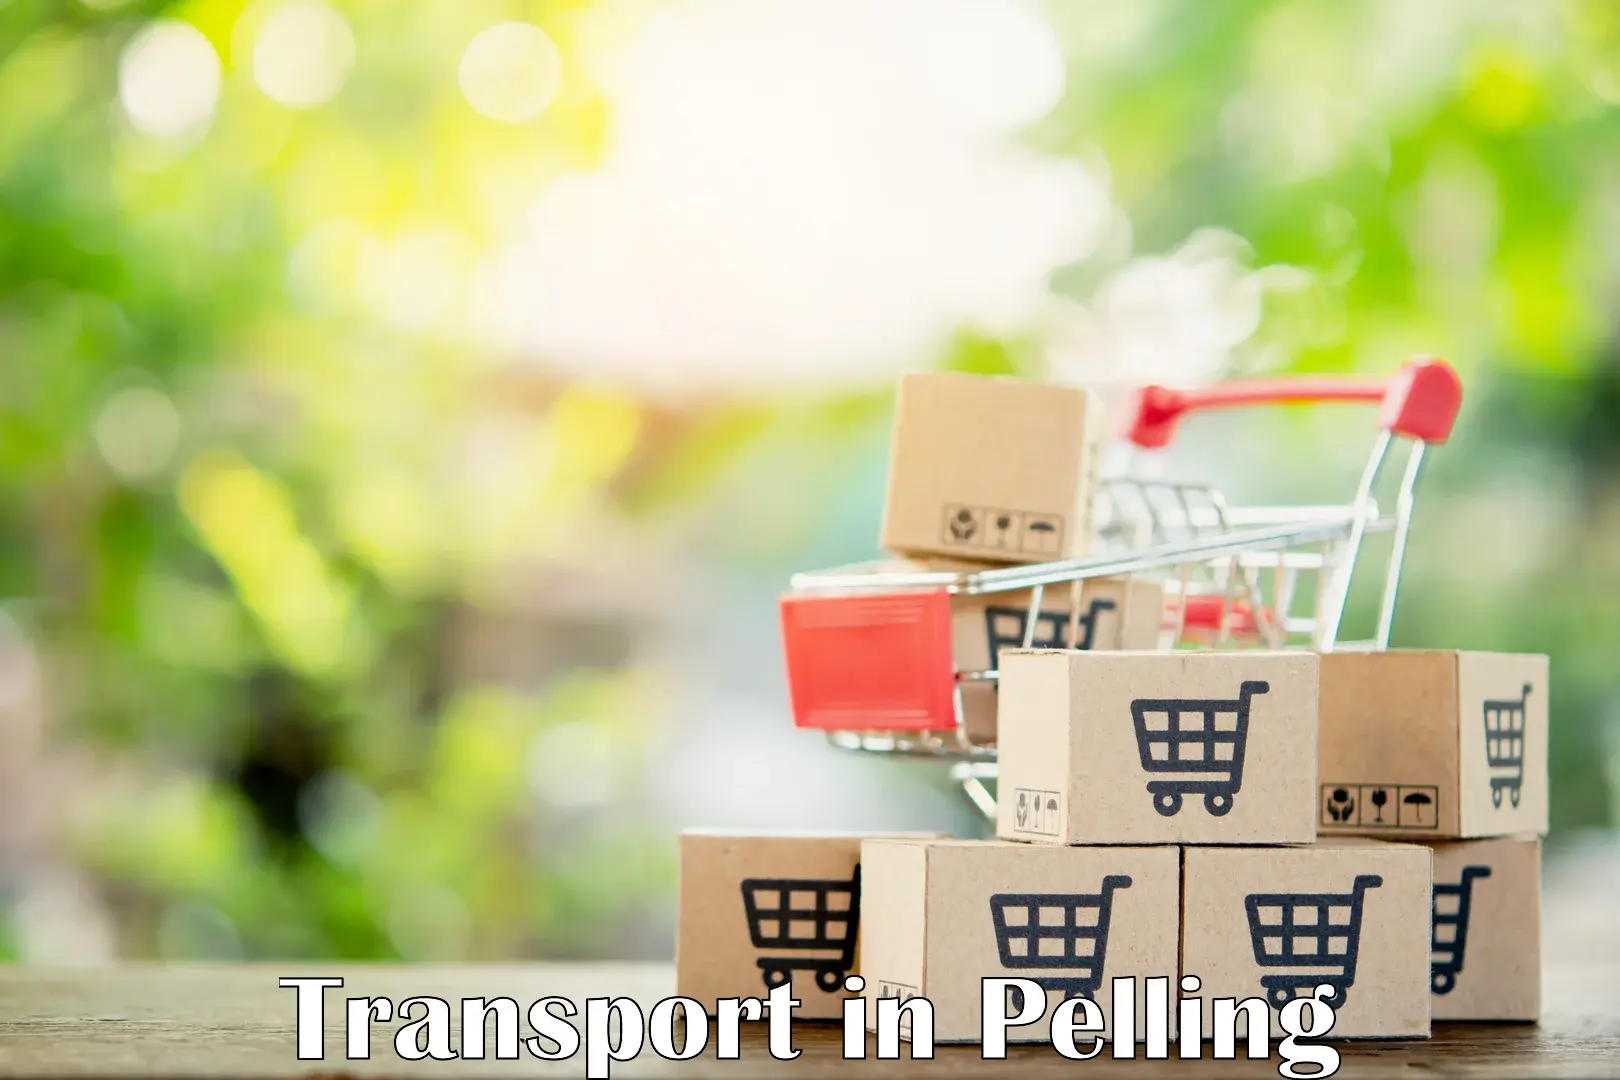 Transport in sharing in Pelling